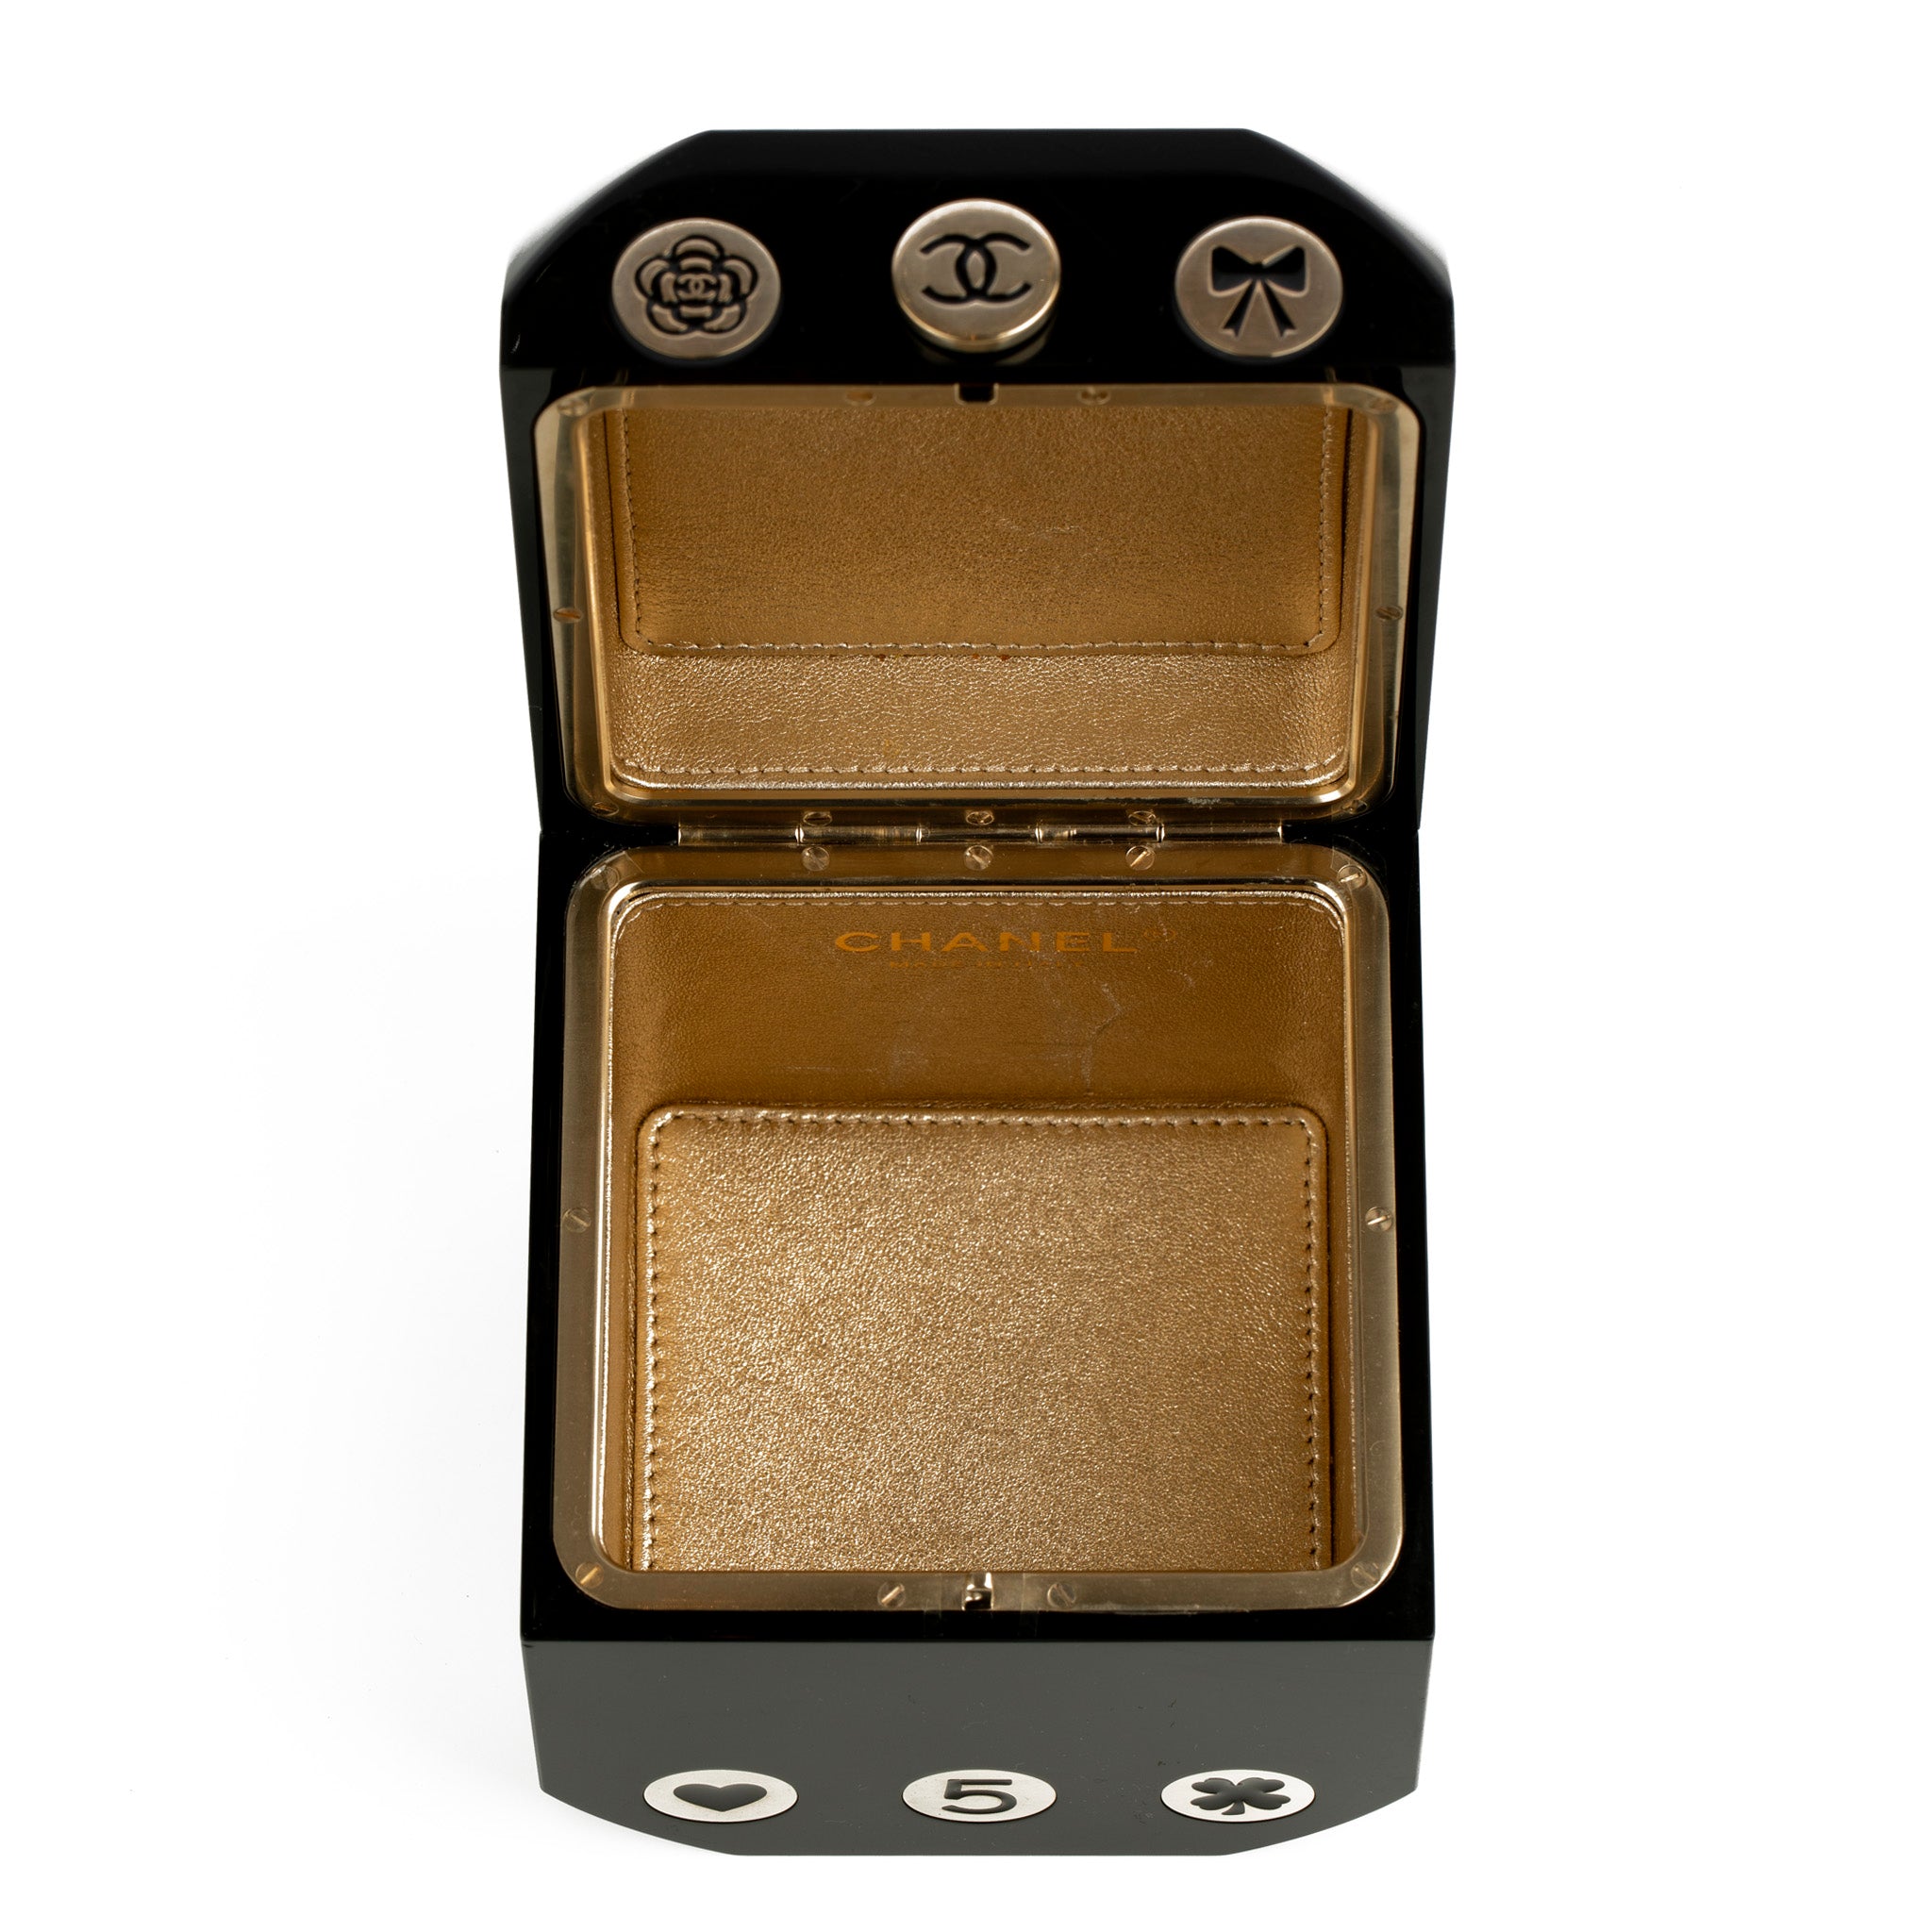 Chanel Minaudière Limited Edition Casino Dice Black Gold-Tone Hardware